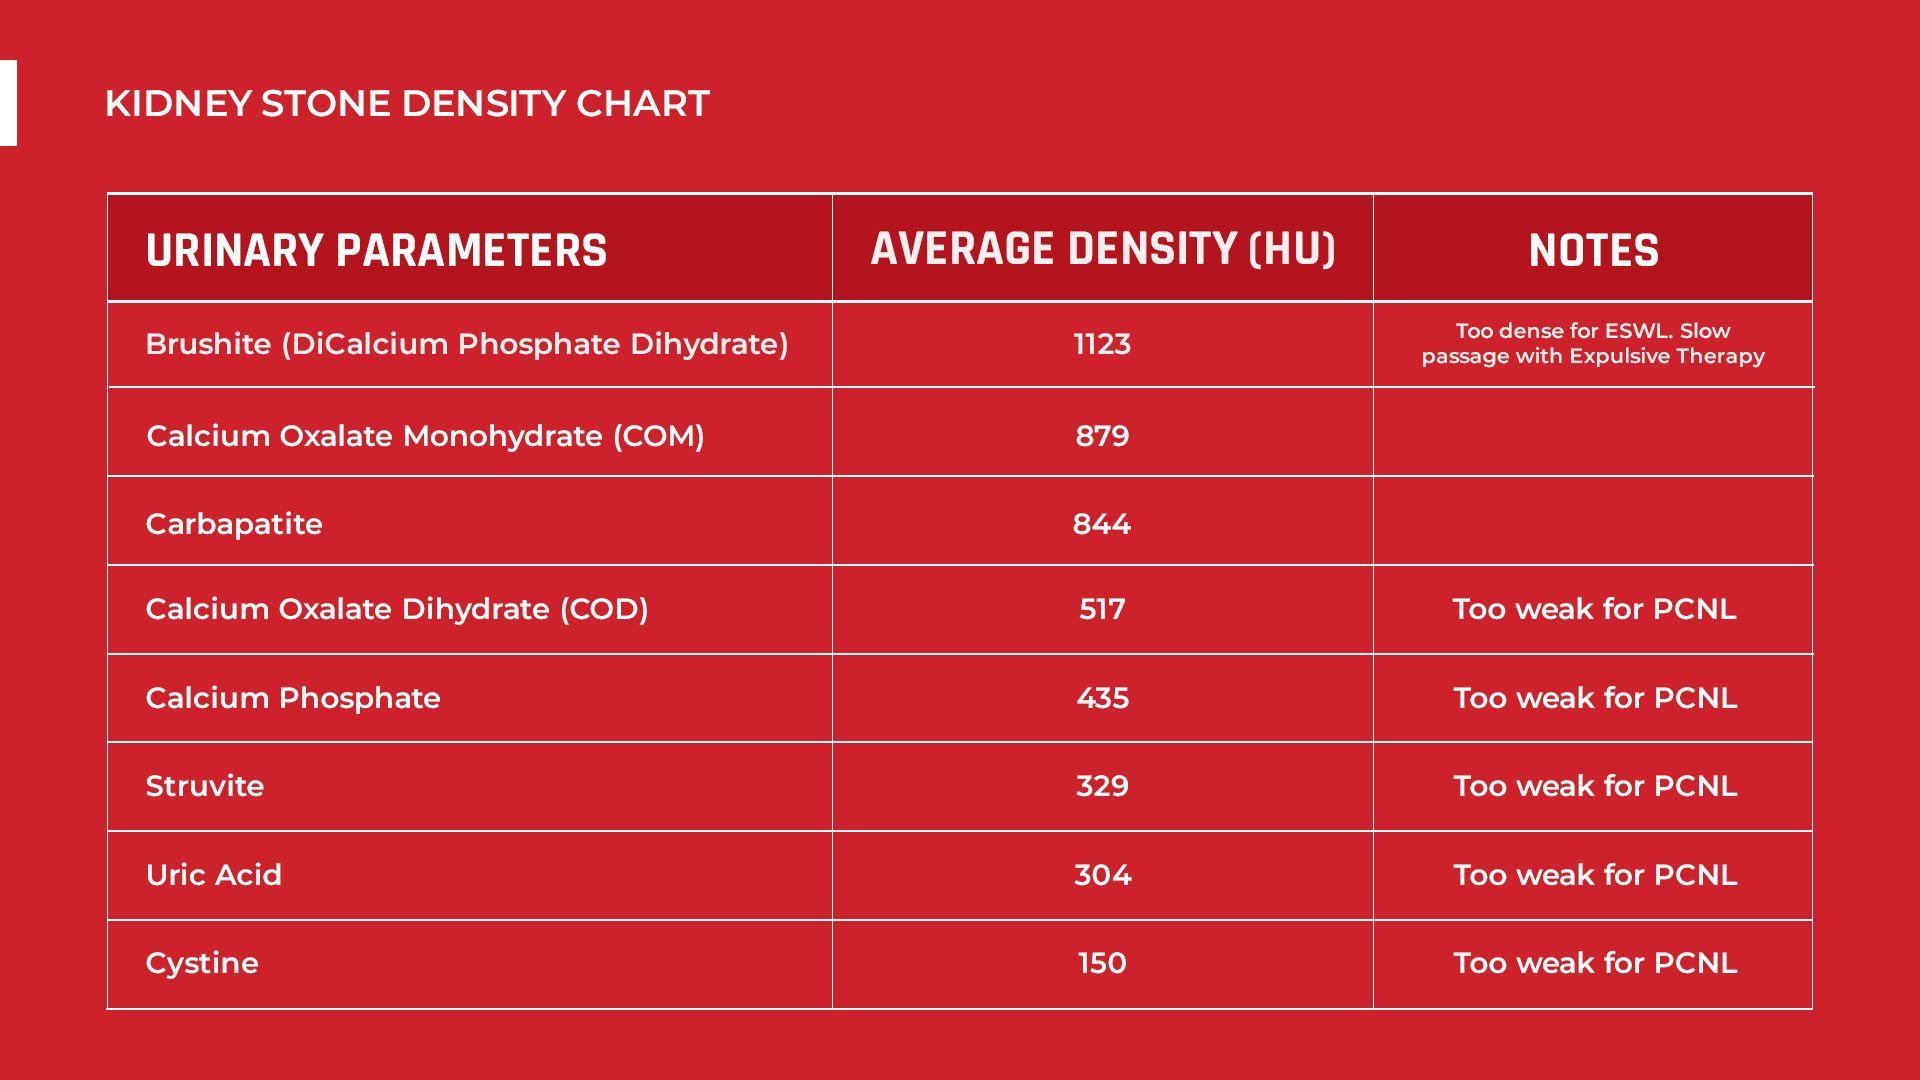 Kidney Stone Density Chart based in Hounsfield Units (HU)